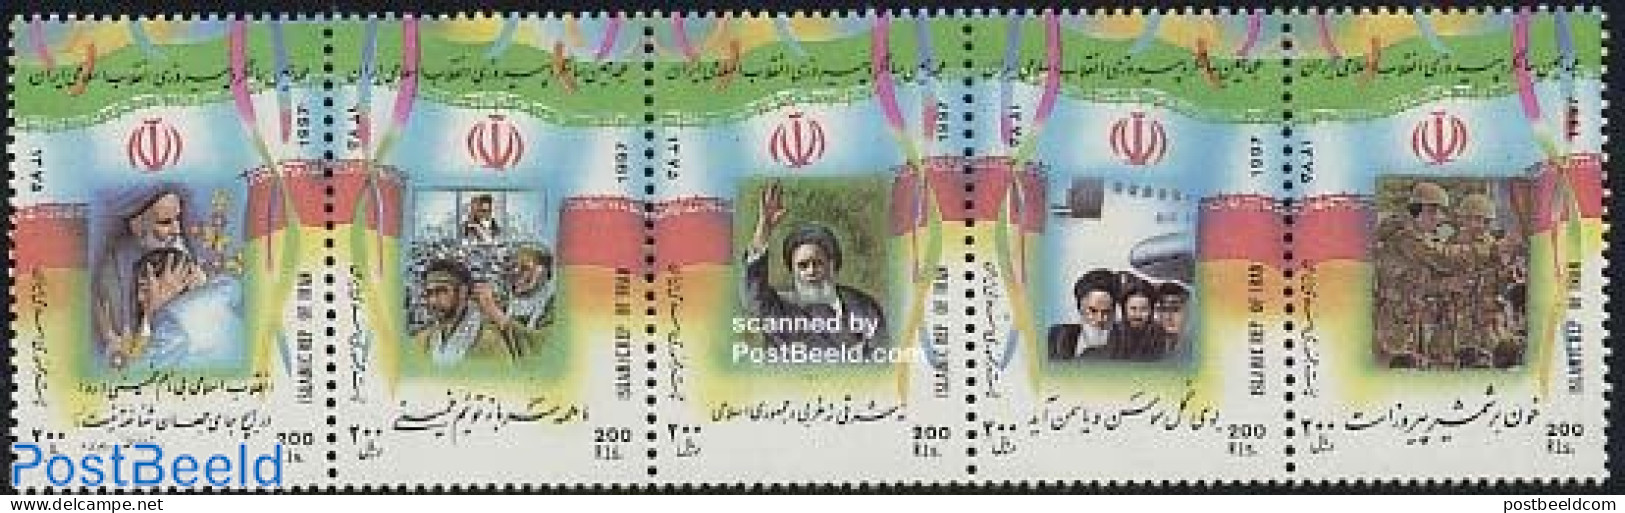 Persia 1997 Islamic Revolution 5v [::::], Mint NH, History - Flags - Iran